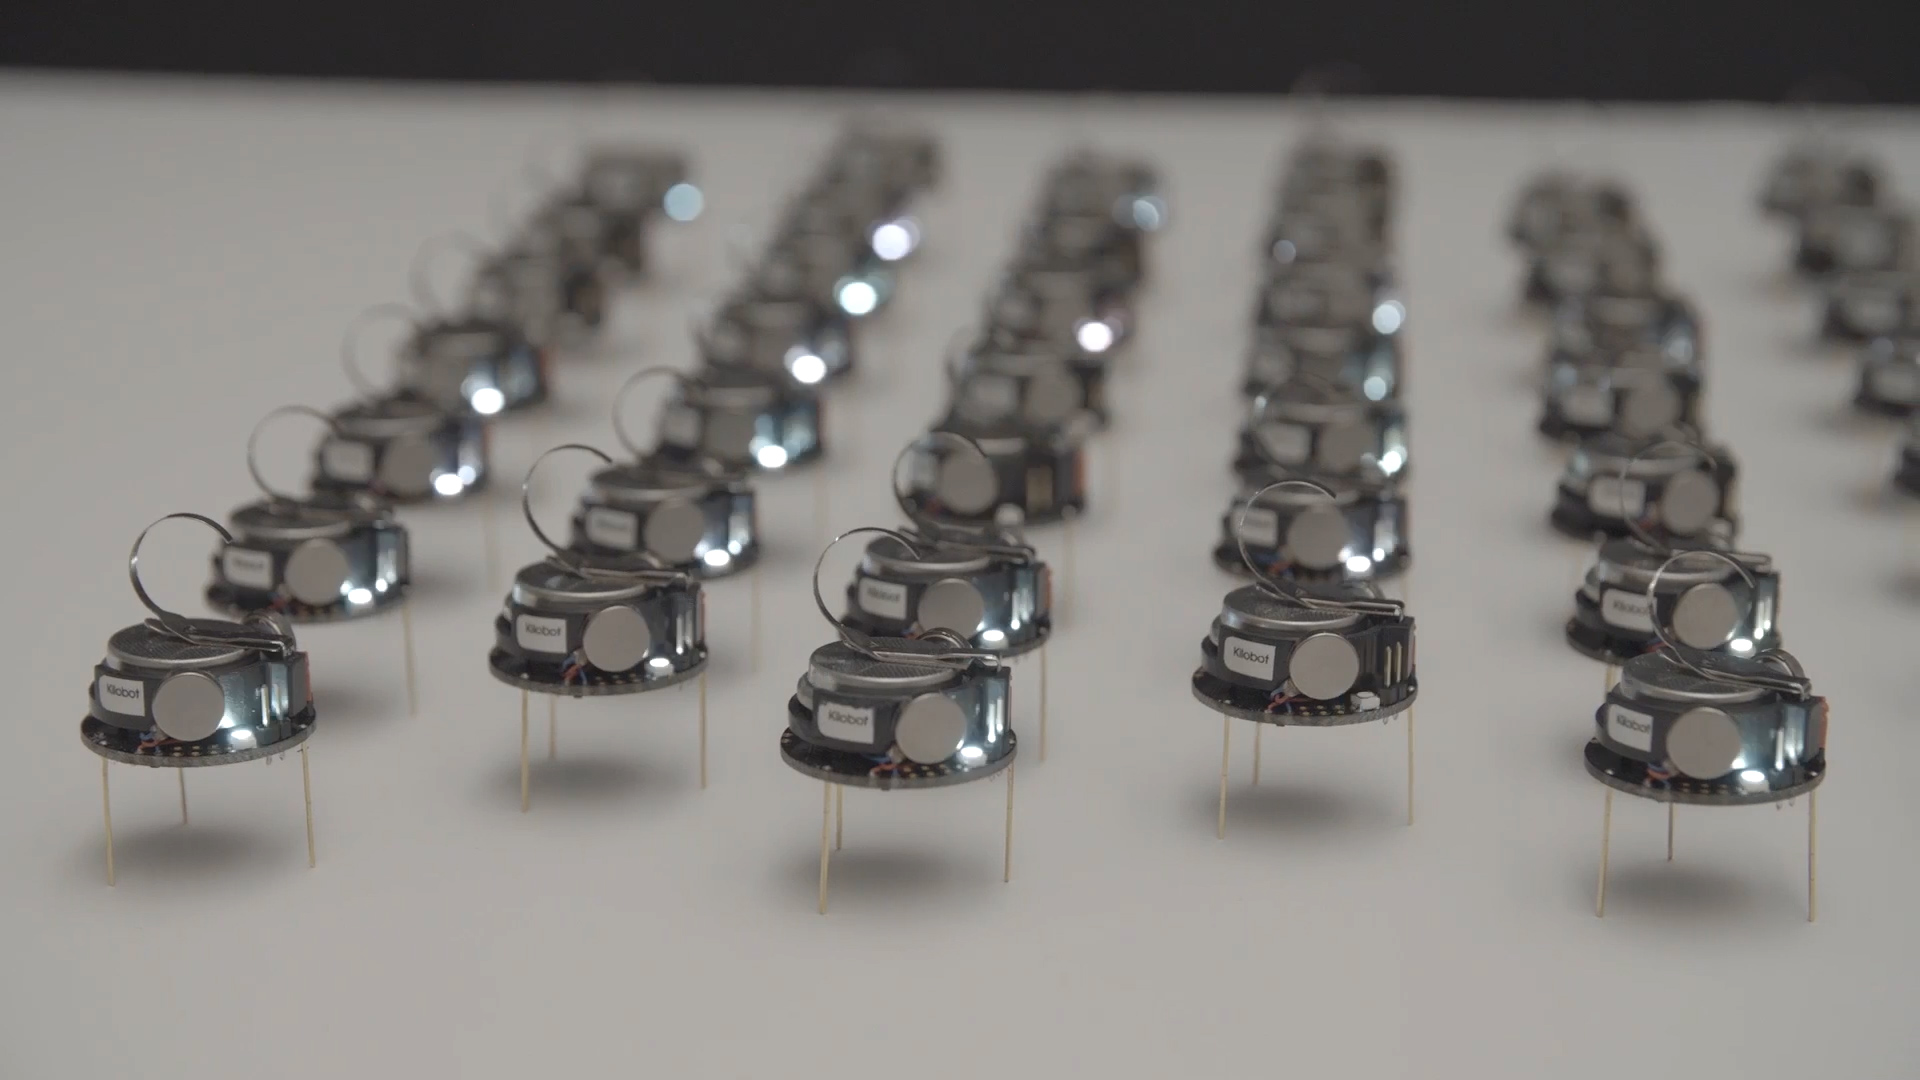 Kilobots can synchronize their flashing lights like fireflies by sensing and imitating their neighbors. 